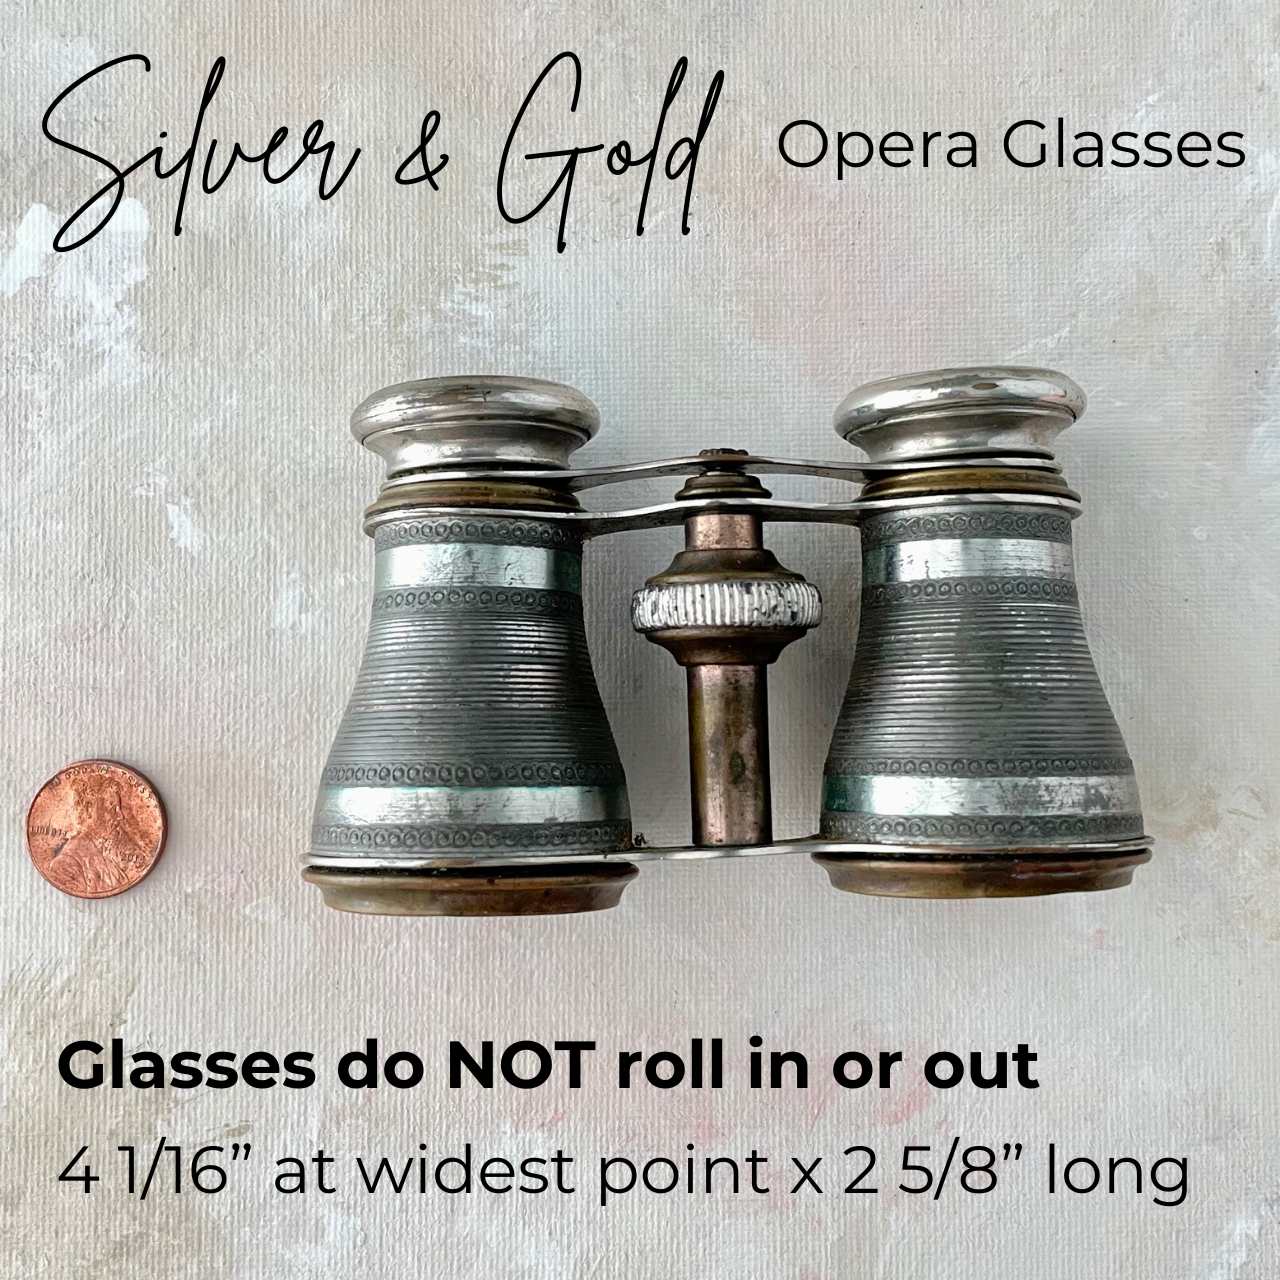 Silver & Gold Vintage Opera Glasses